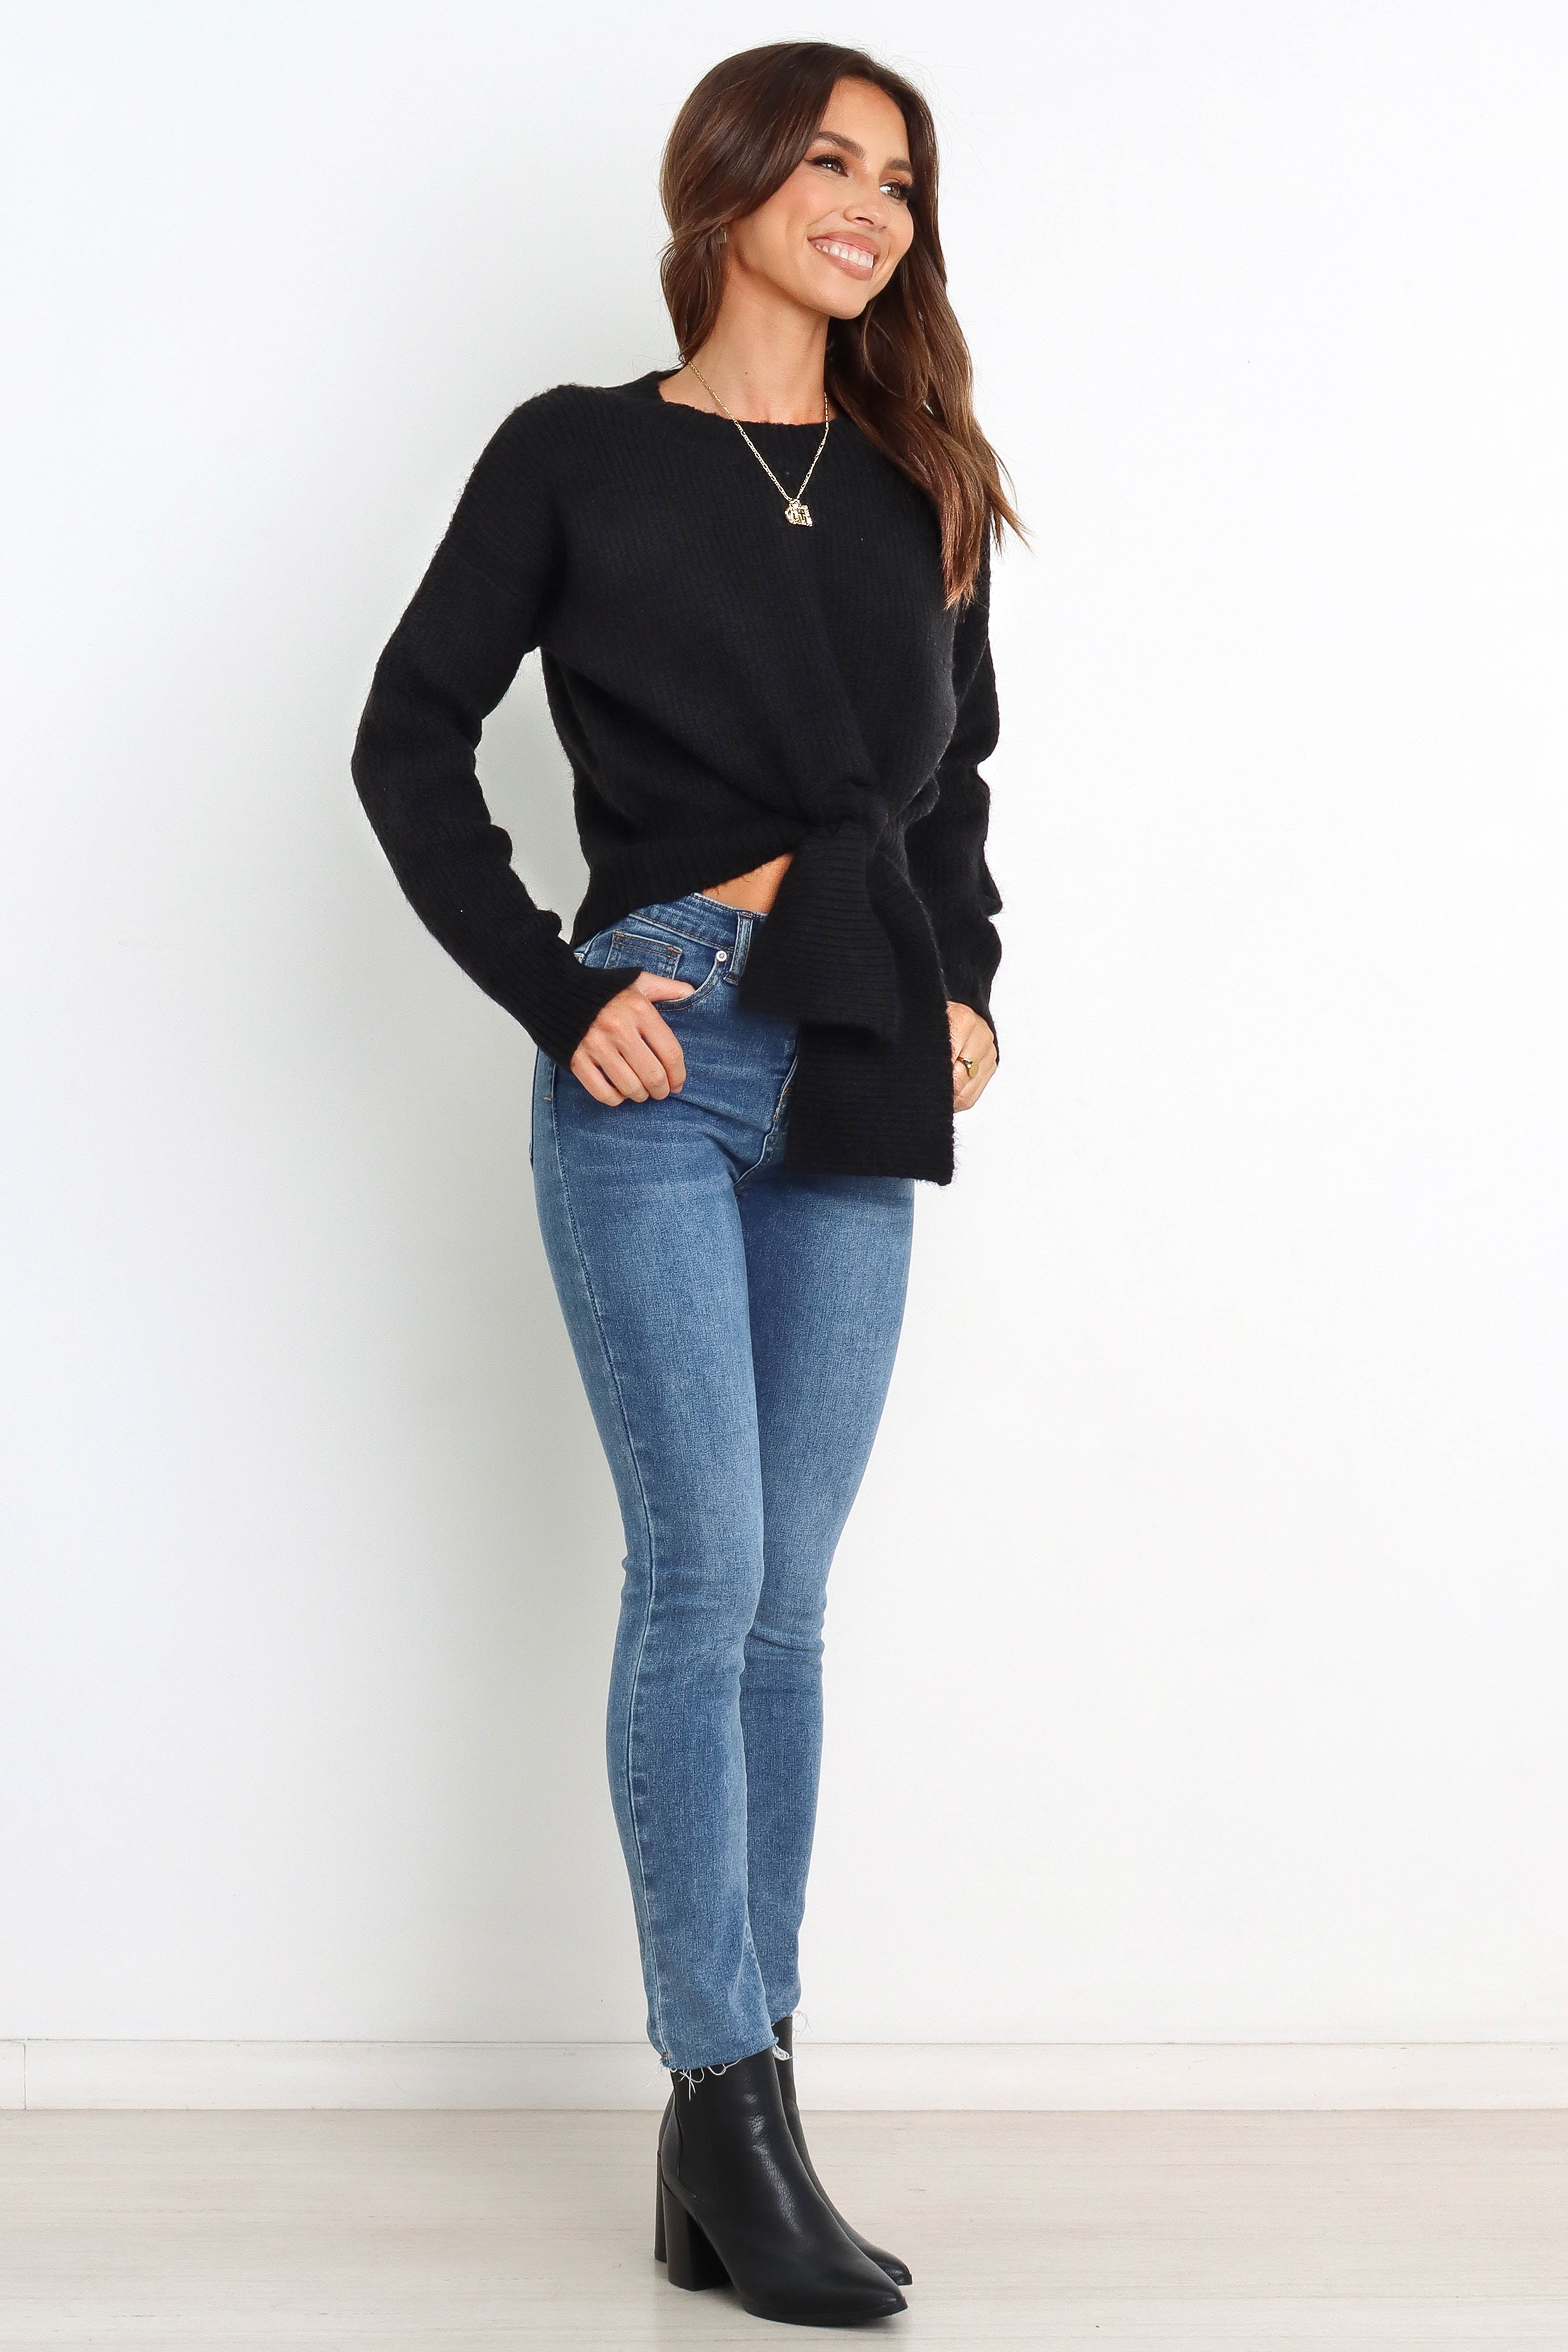 Captivate Knit Sweater - Black